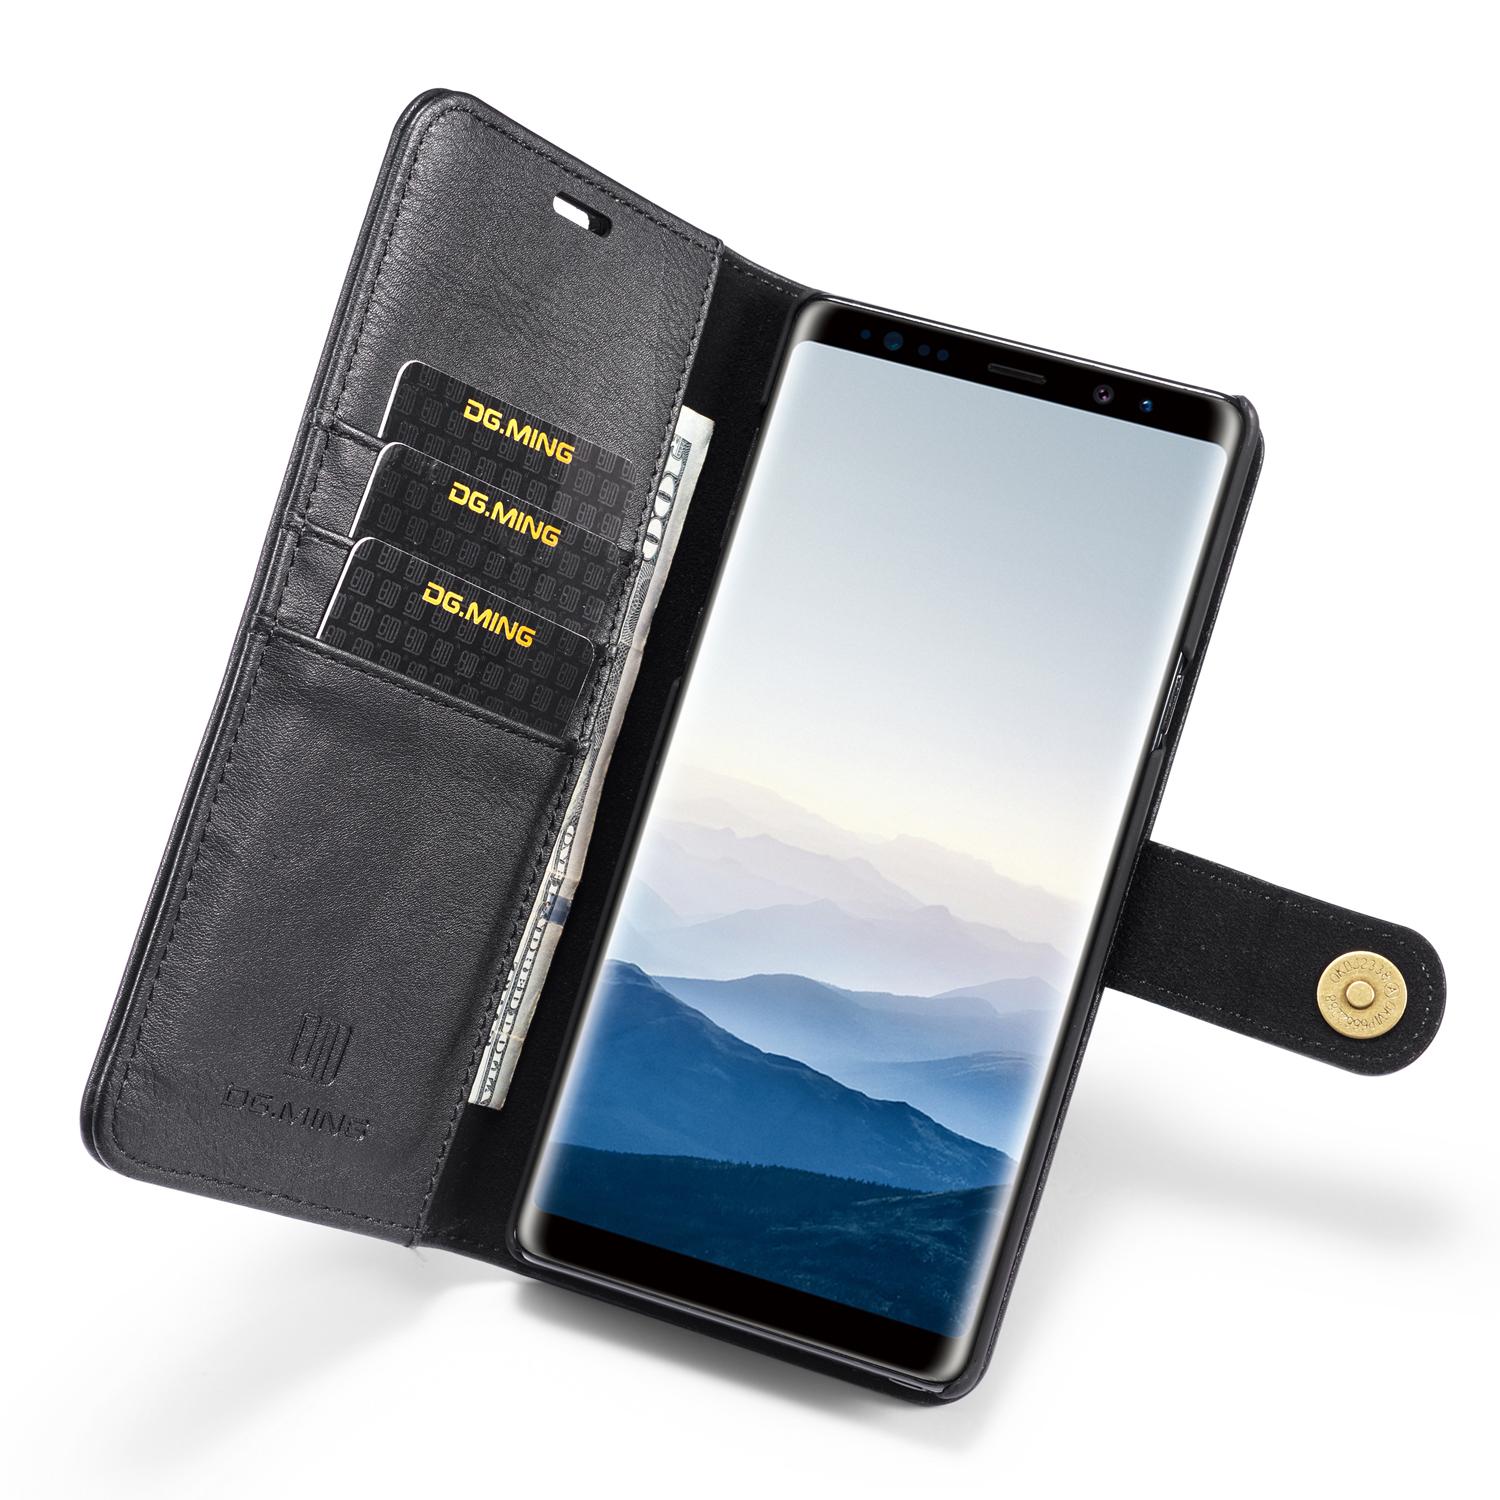 Cartera Magnet Wallet Samsung Galaxy Note 9 Black